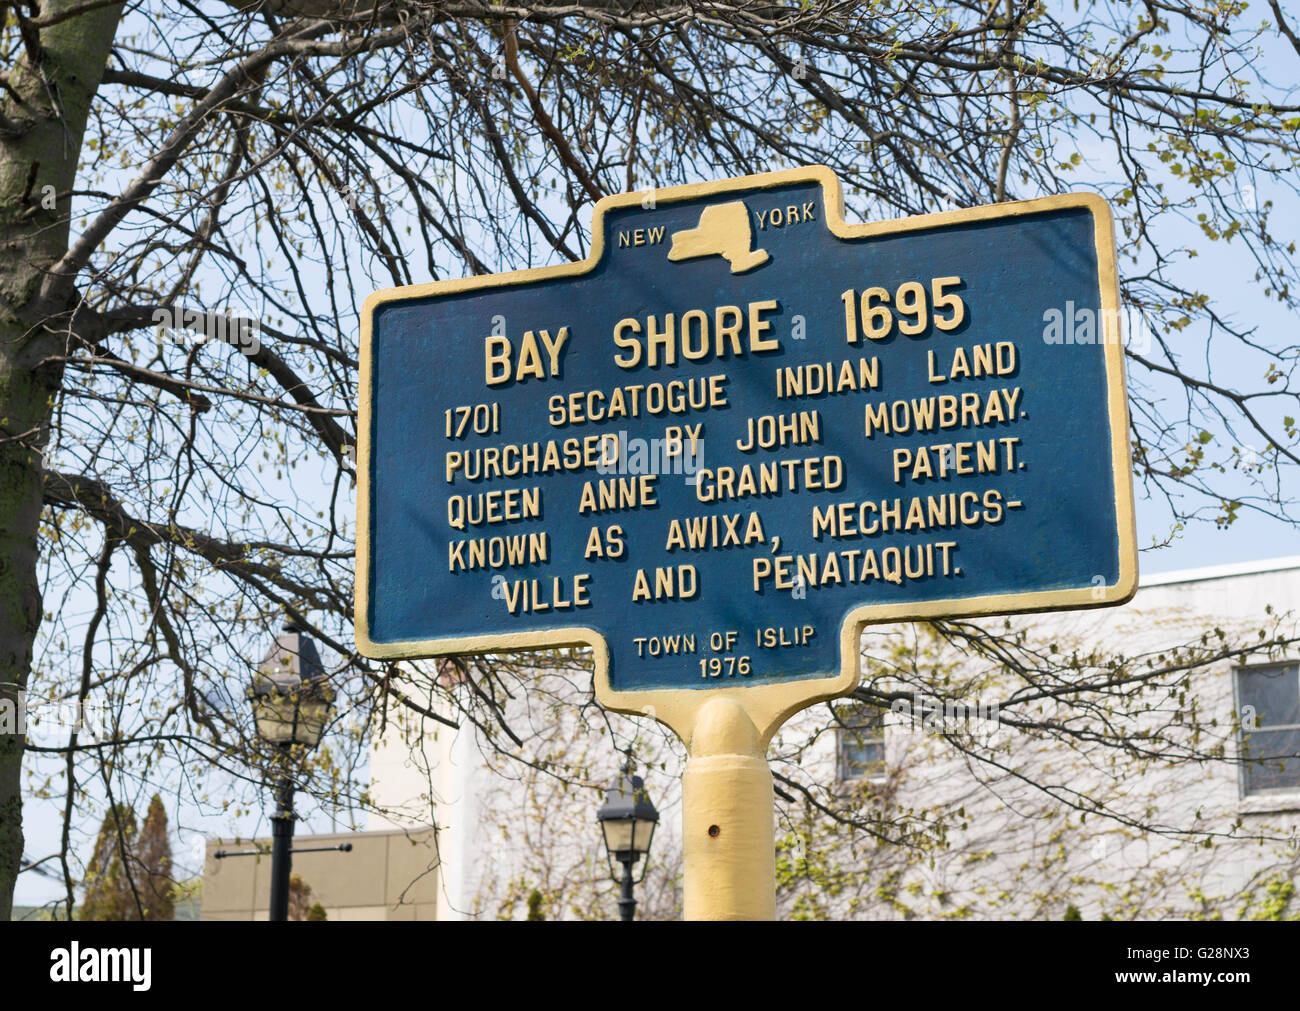 Avviso Bay Shore 1695, acquisto di Secatogue terra indiana, città di Islip, Long Island, New York, Stati Uniti d'America Foto Stock